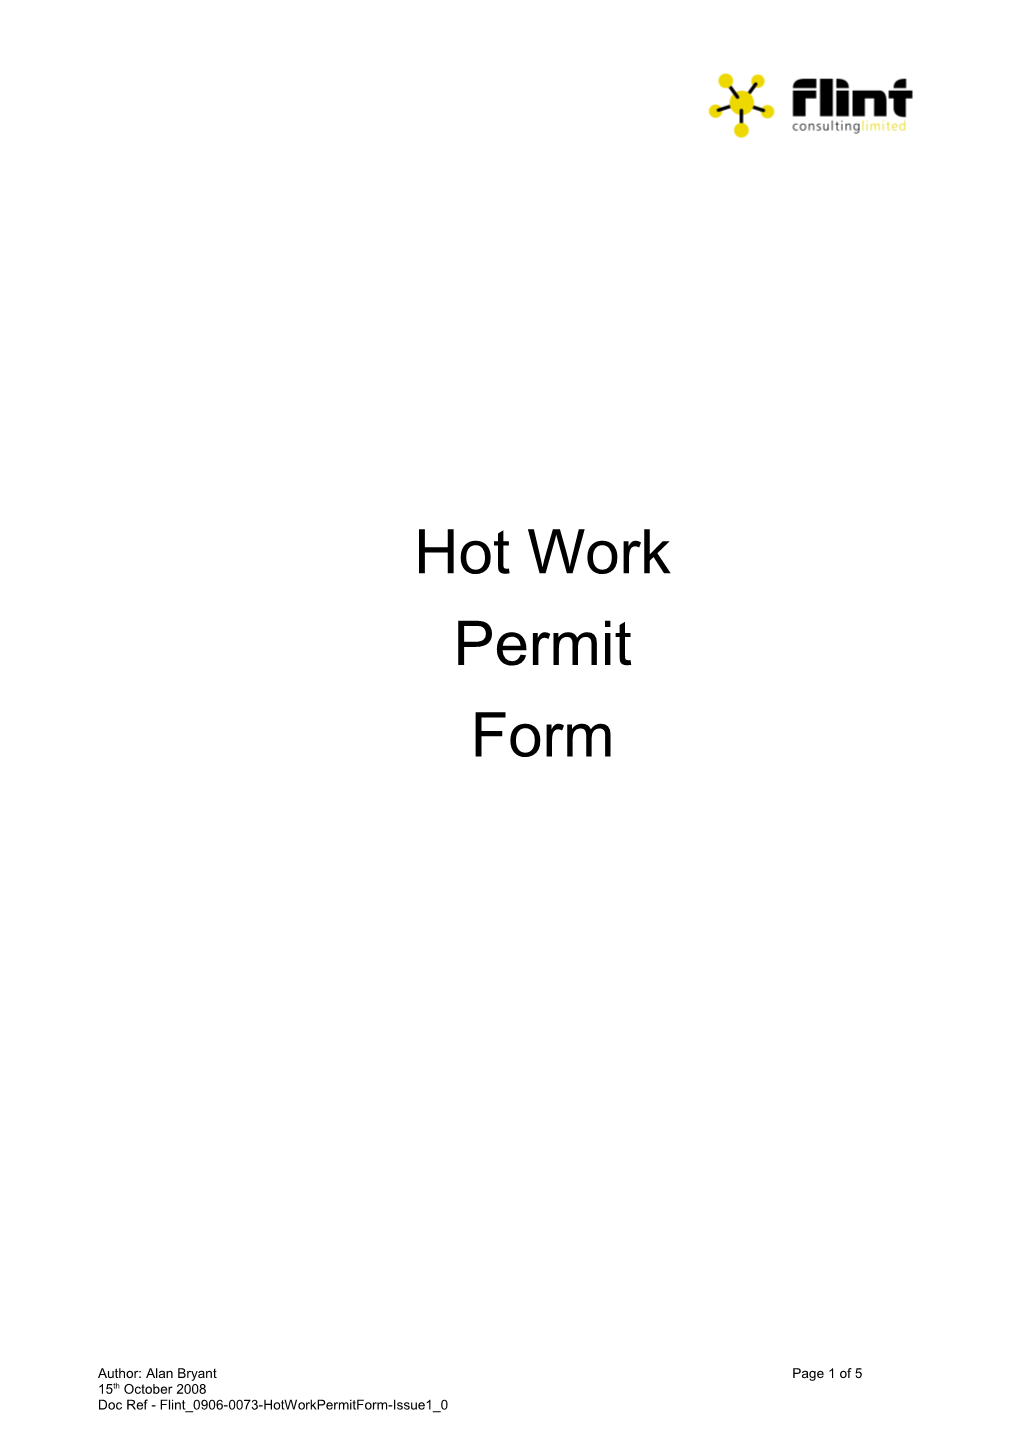 Flint Hot Work Permit Form